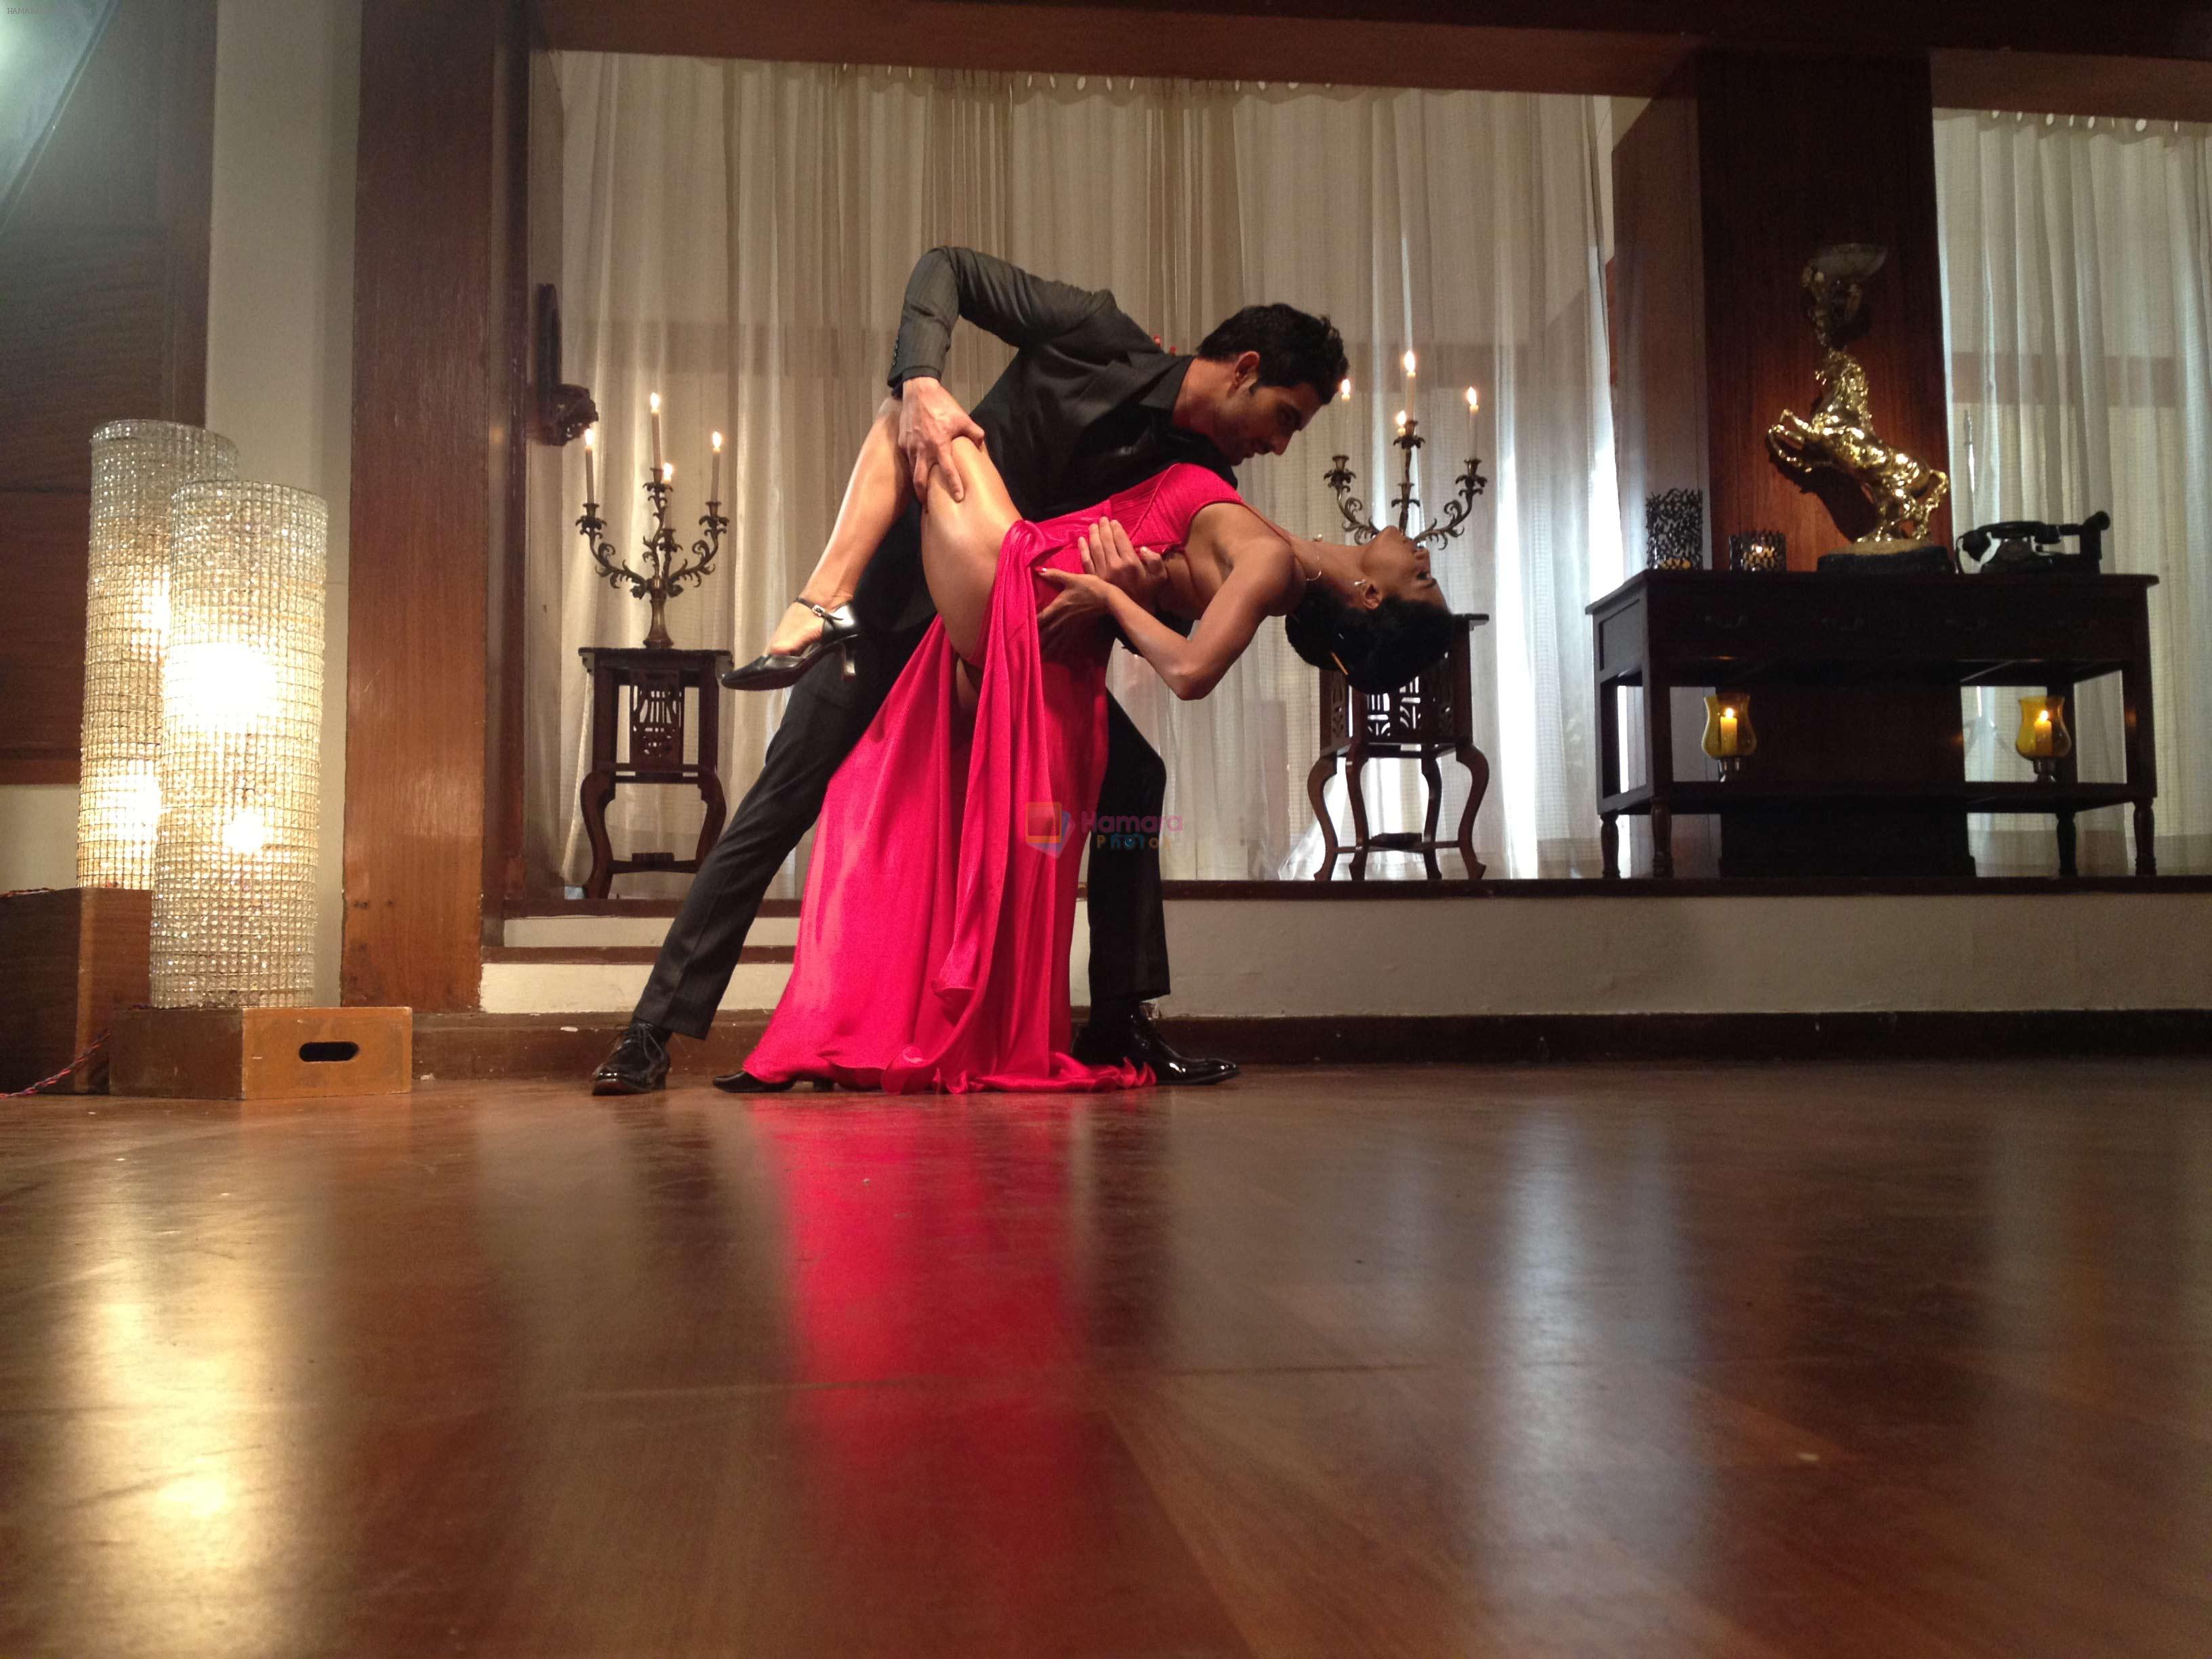 Veena Malik shaking her leg on Salsa choreographed by longinus fernandes